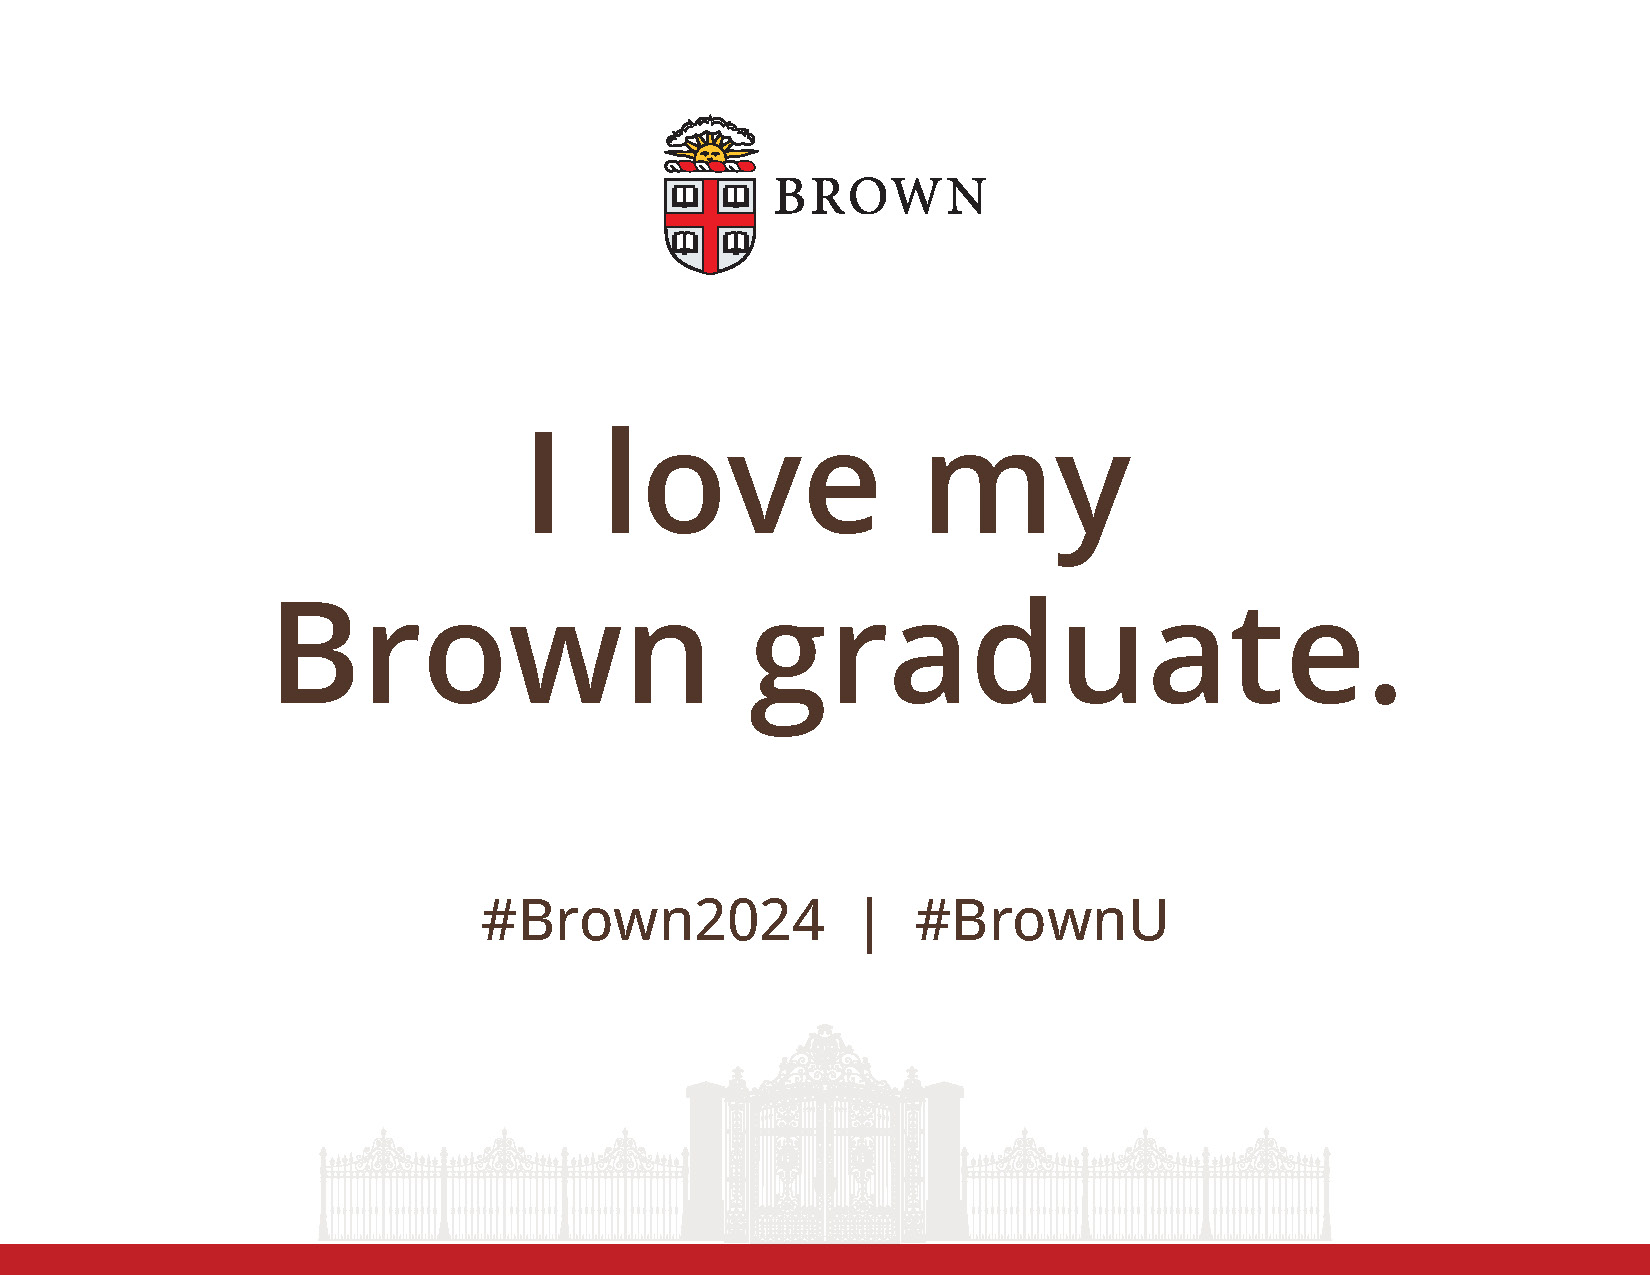 I love my Brown grad poster